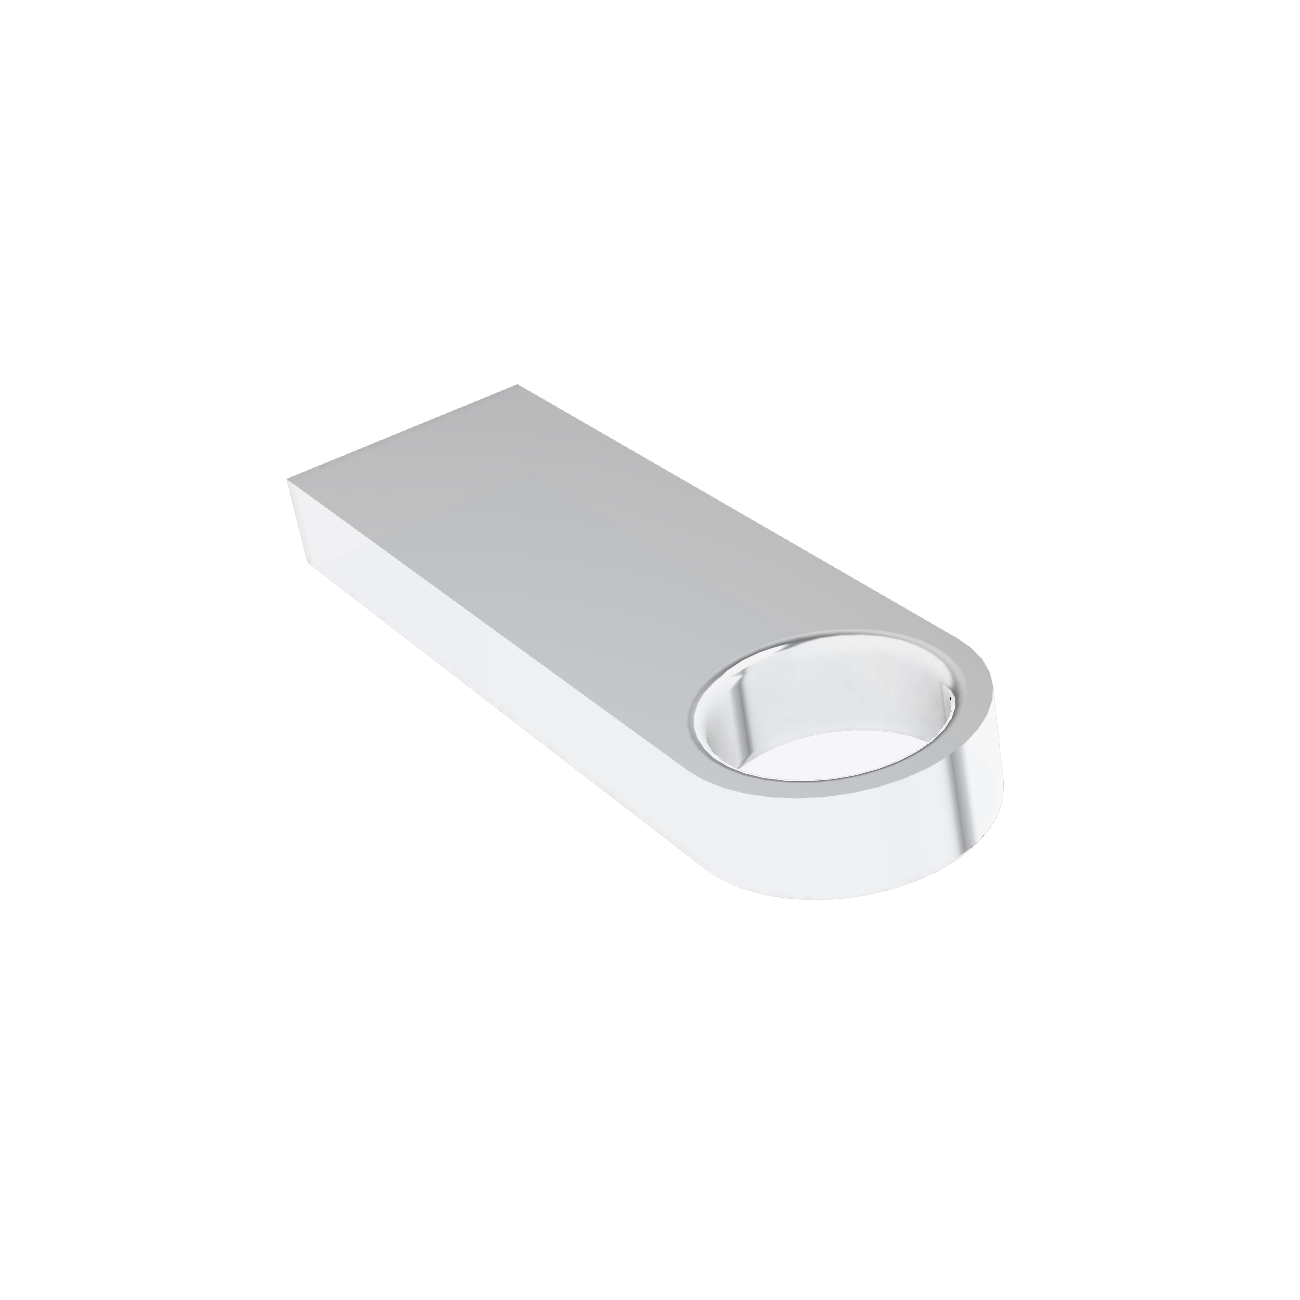 USB GERMANY ® SE09 USB-Stick (Silber, GB) 1